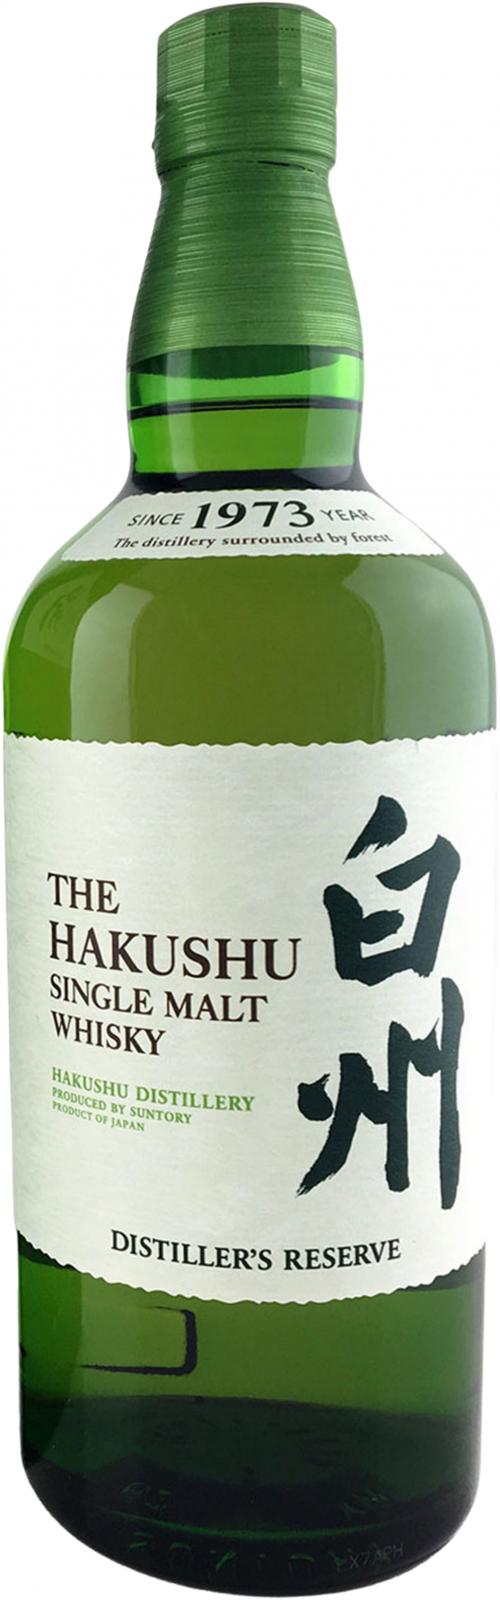 Hakushu Distiller's Reserve Ratings and reviews Whiskybase